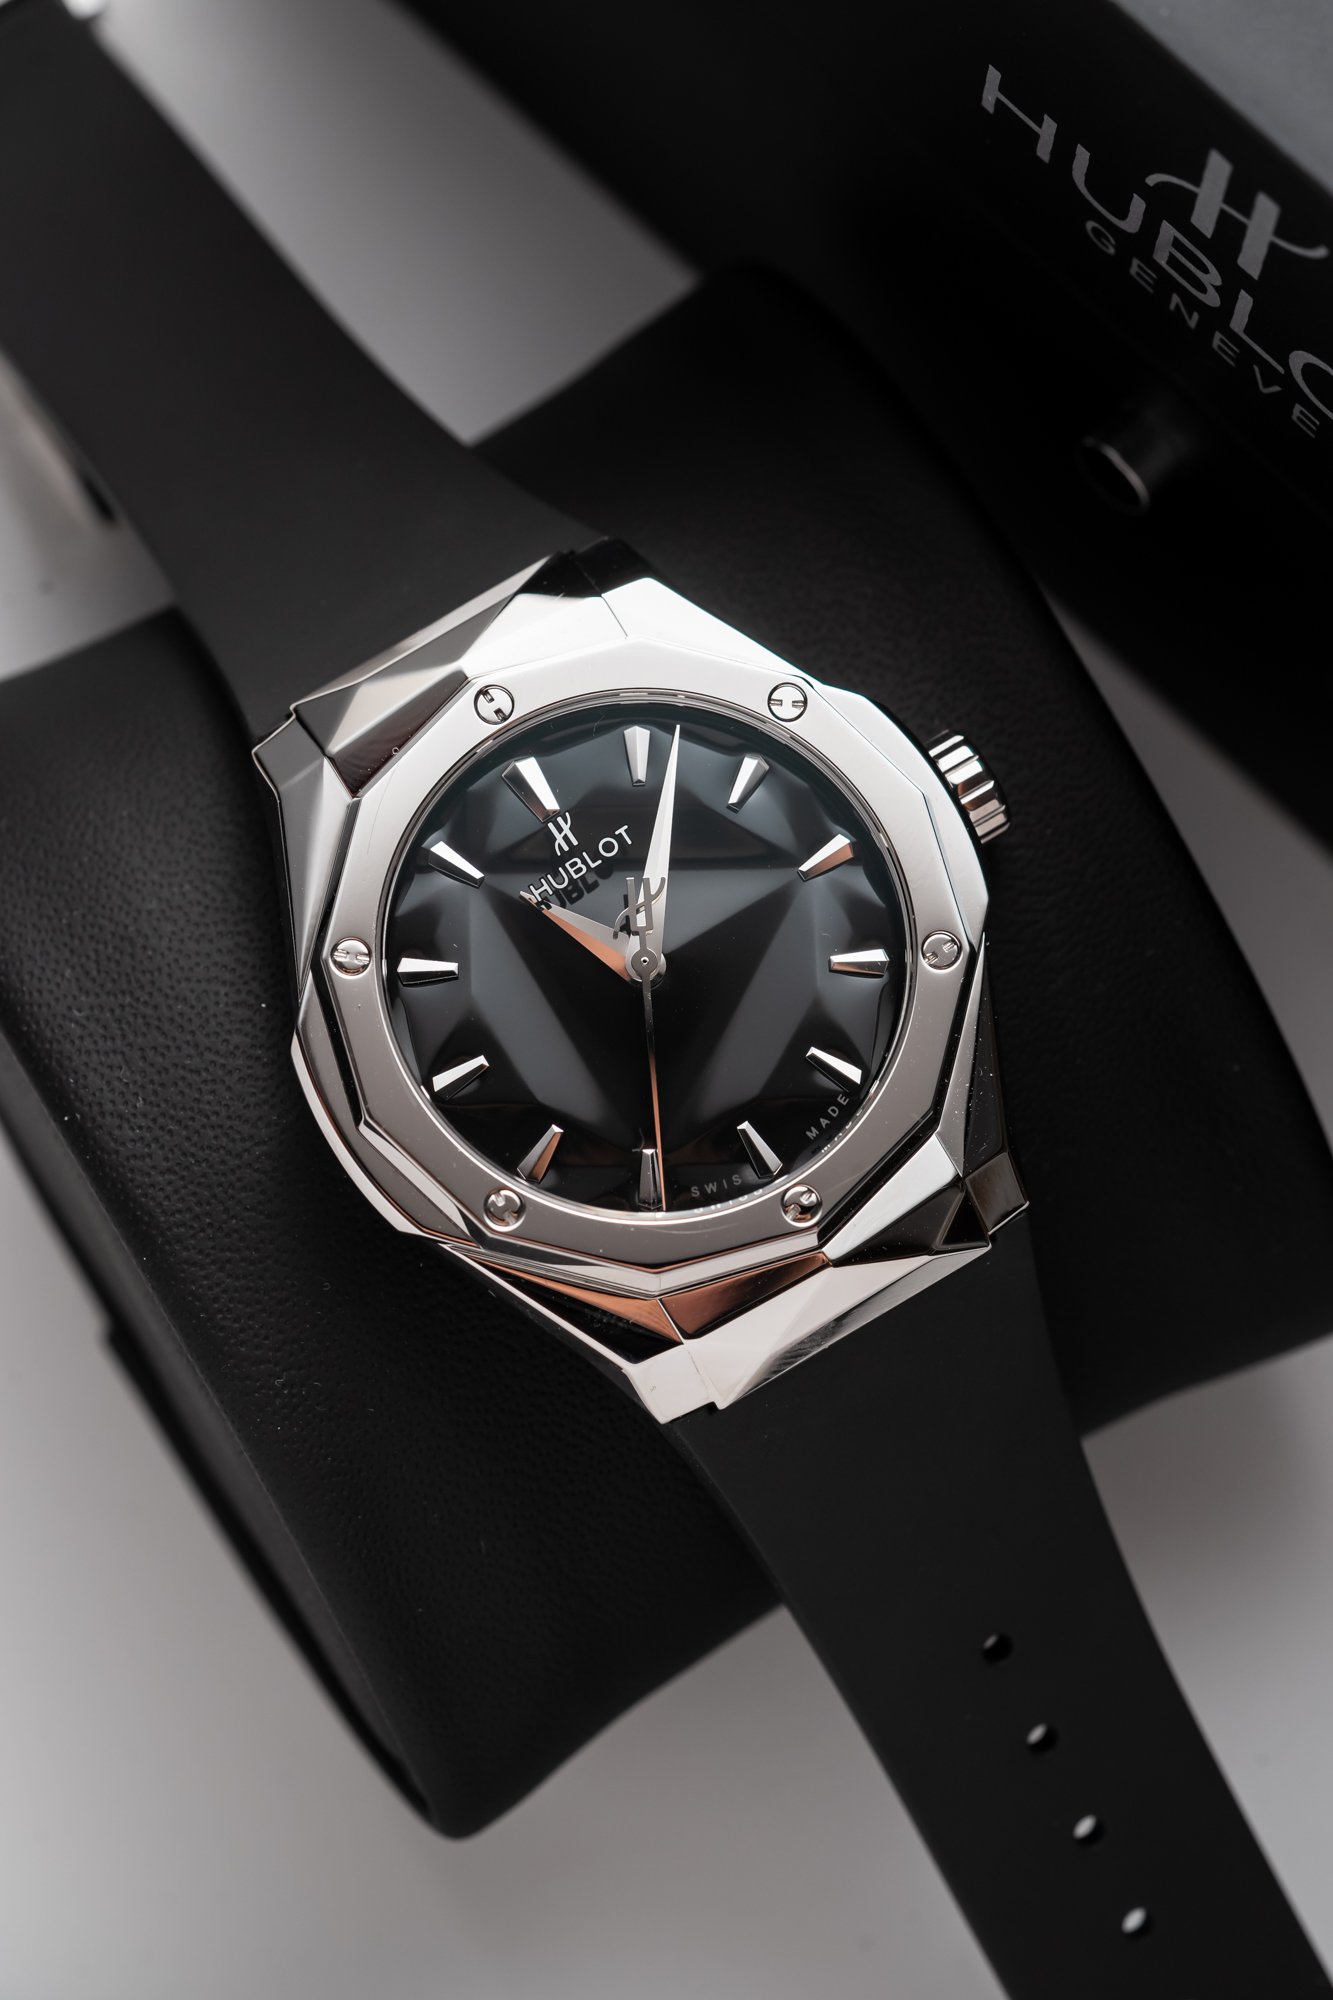 Giới thiệu về mẫu đồng hồ Hublot Orlinski Titanium the best quality replica